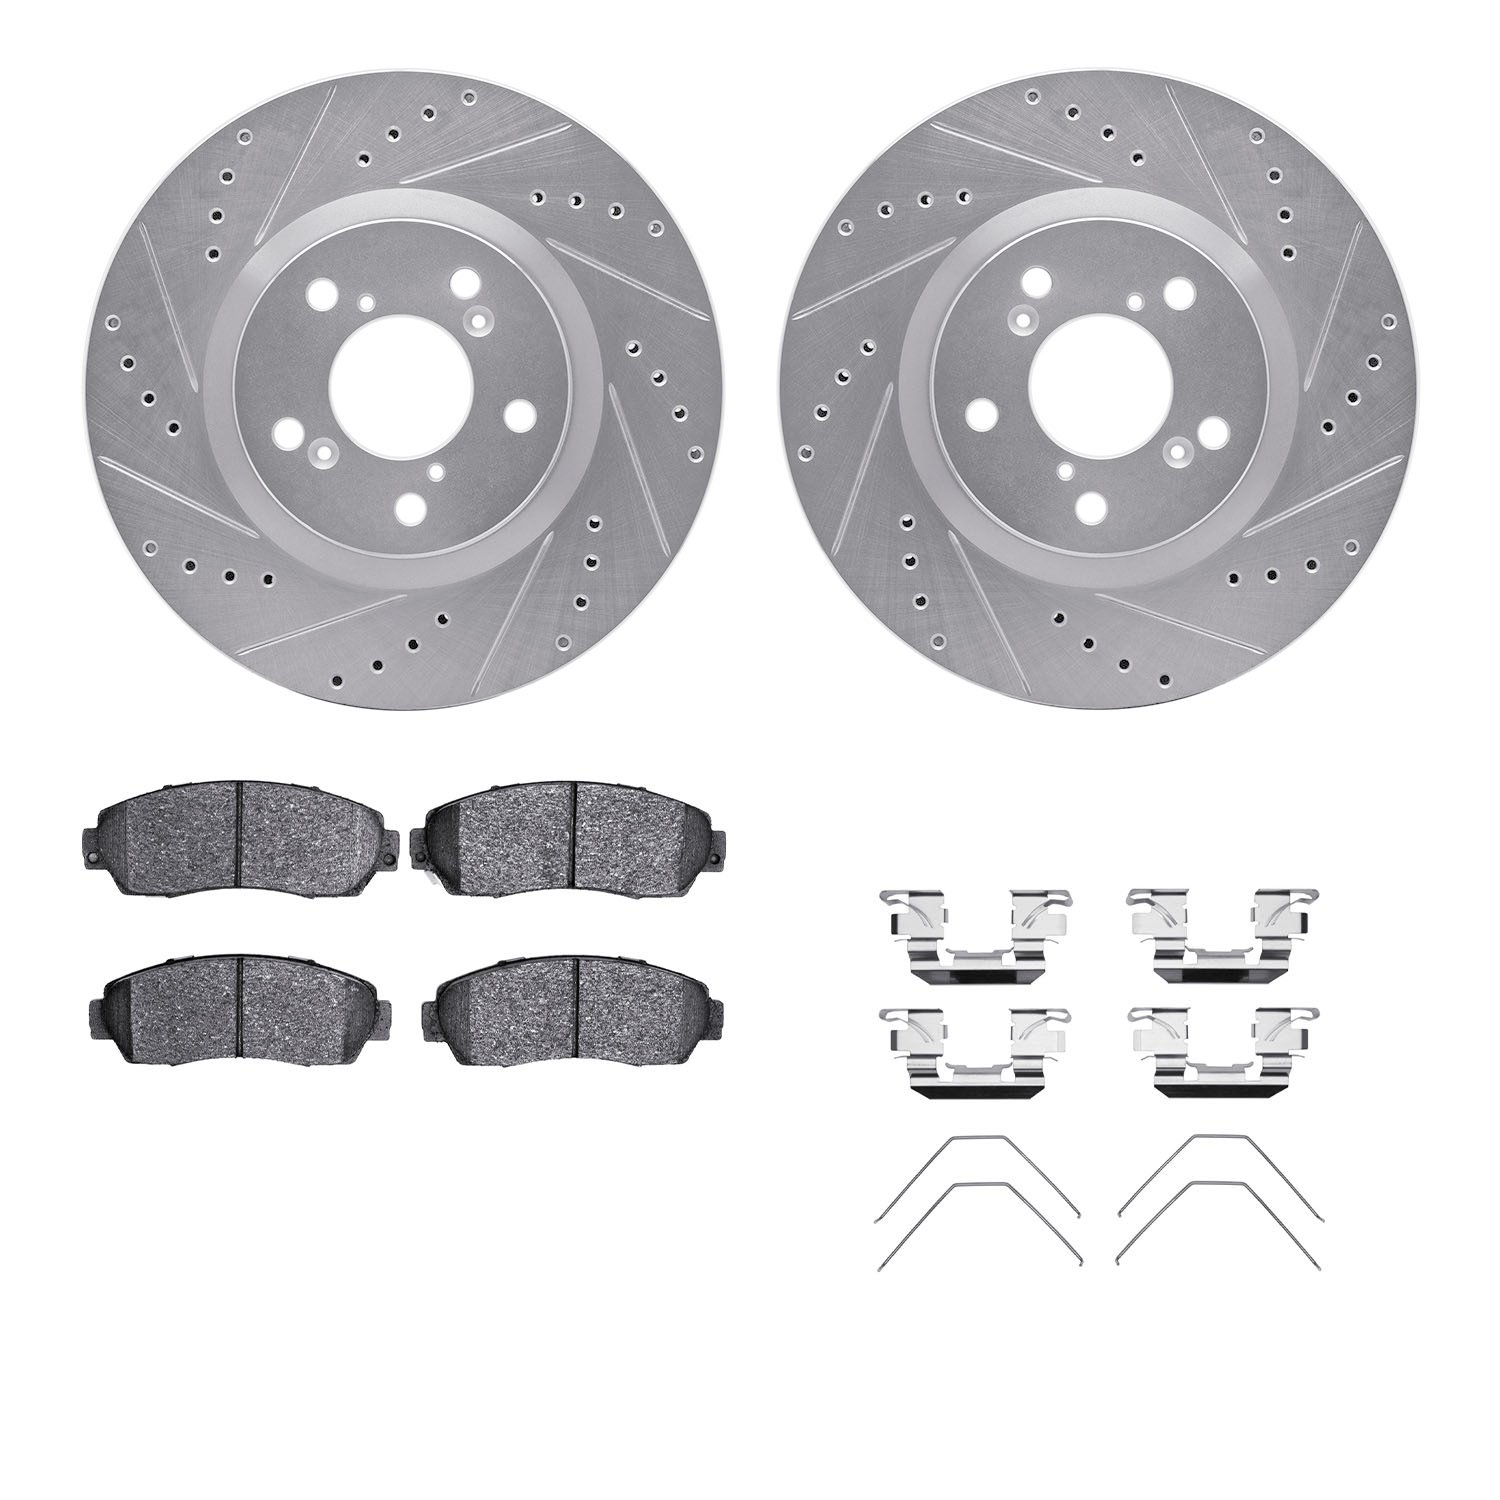 7312-59086 Drilled/Slotted Brake Rotor with 3000-Series Ceramic Brake Pads Kit & Hardware [Silver], 2011-2014 Acura/Honda, Posit